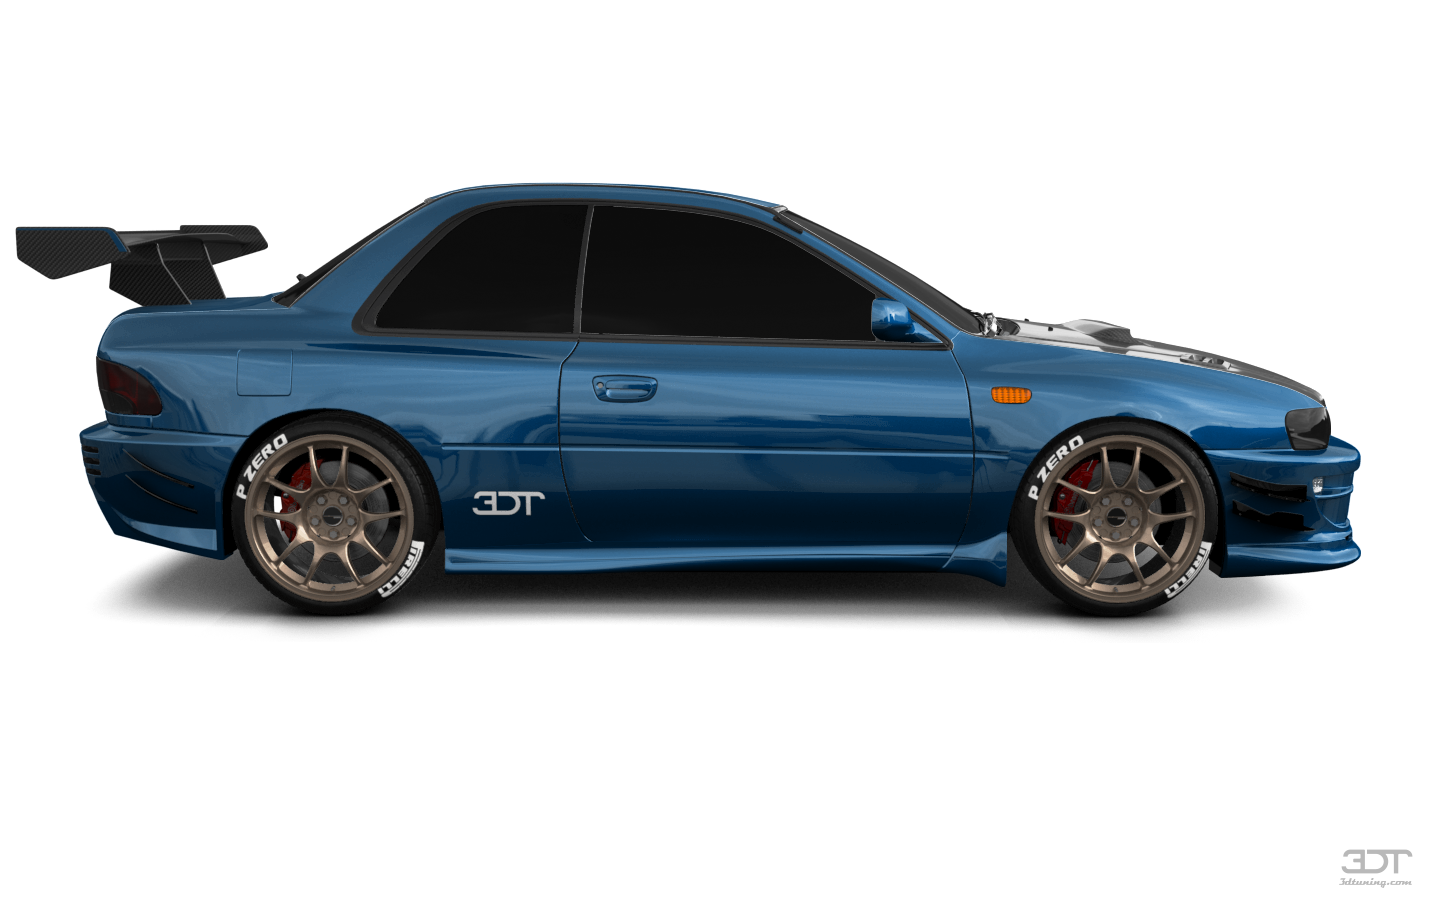 Subaru Impreza WRX STI 22B 2 Door Coupe 2000